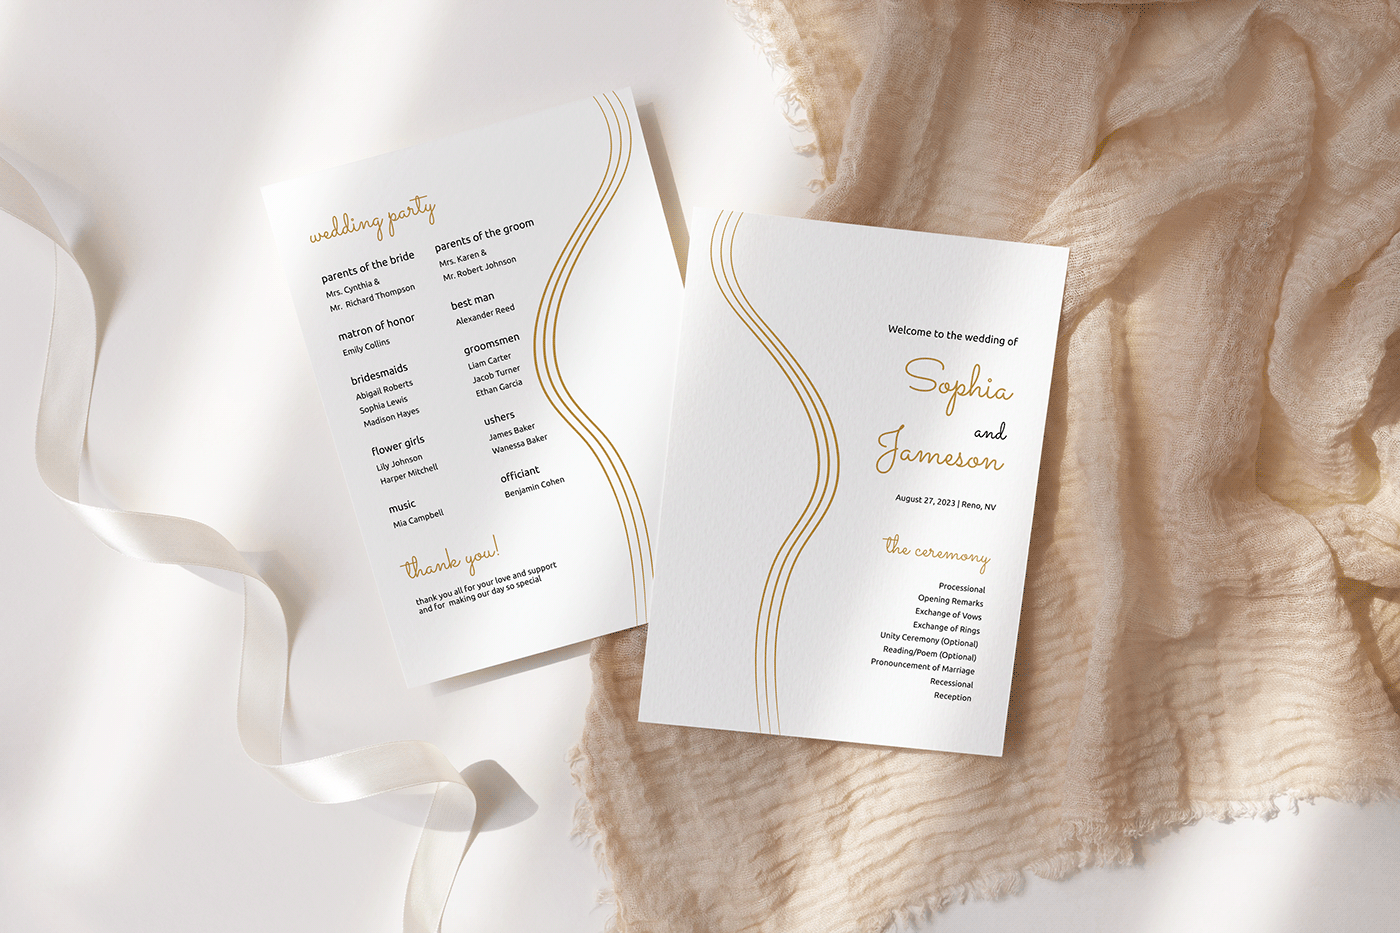 menu Invitation wedding thank you card design template etsy bundle minimal stationary